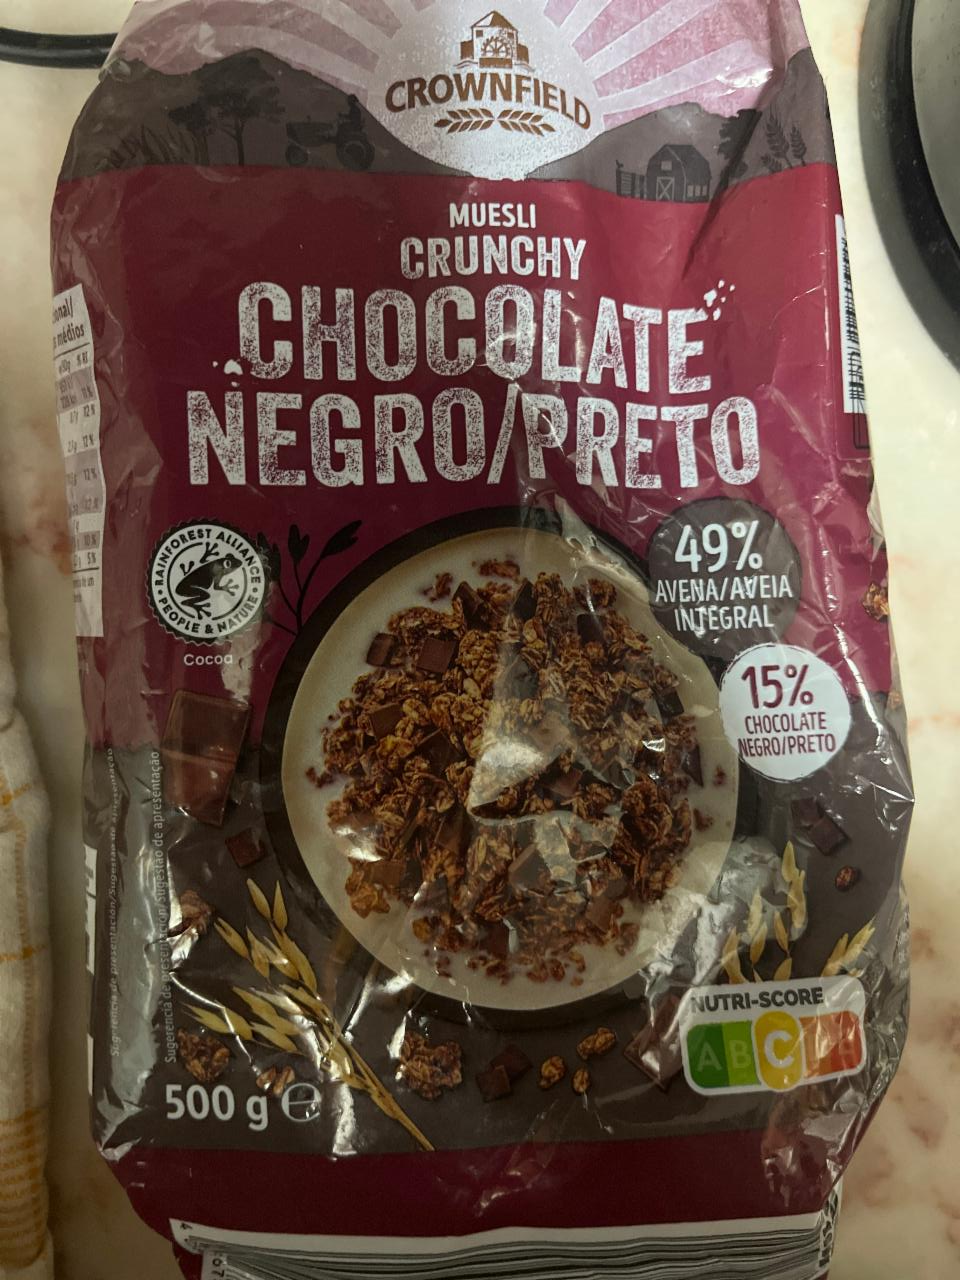 Fotografie - Muesli Crunchy Chocolate Negro/Preto Crownfield